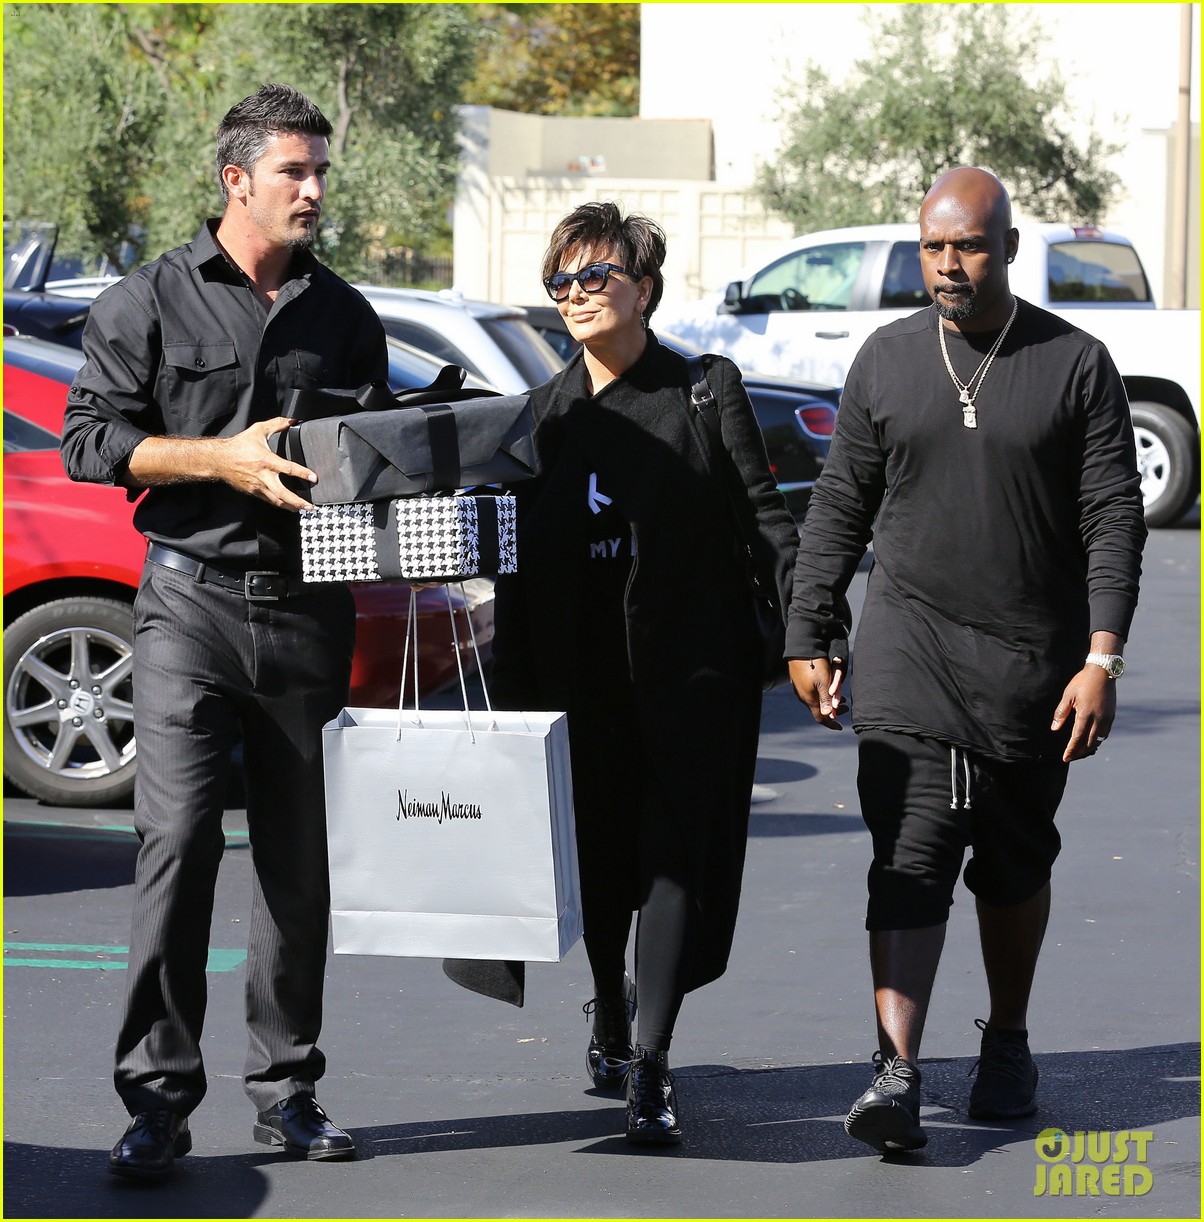 51885298 The Kardashian clan heads to Cinepolis Theater in Thousand Oaks, California on October 21, 2015 to celebrate pregnant reality star Kim Kardashian's birthday. Kim turned 35 years old today. FameFlynet, Inc - Beverly Hills, CA, USA - +1 (818) 307-4813